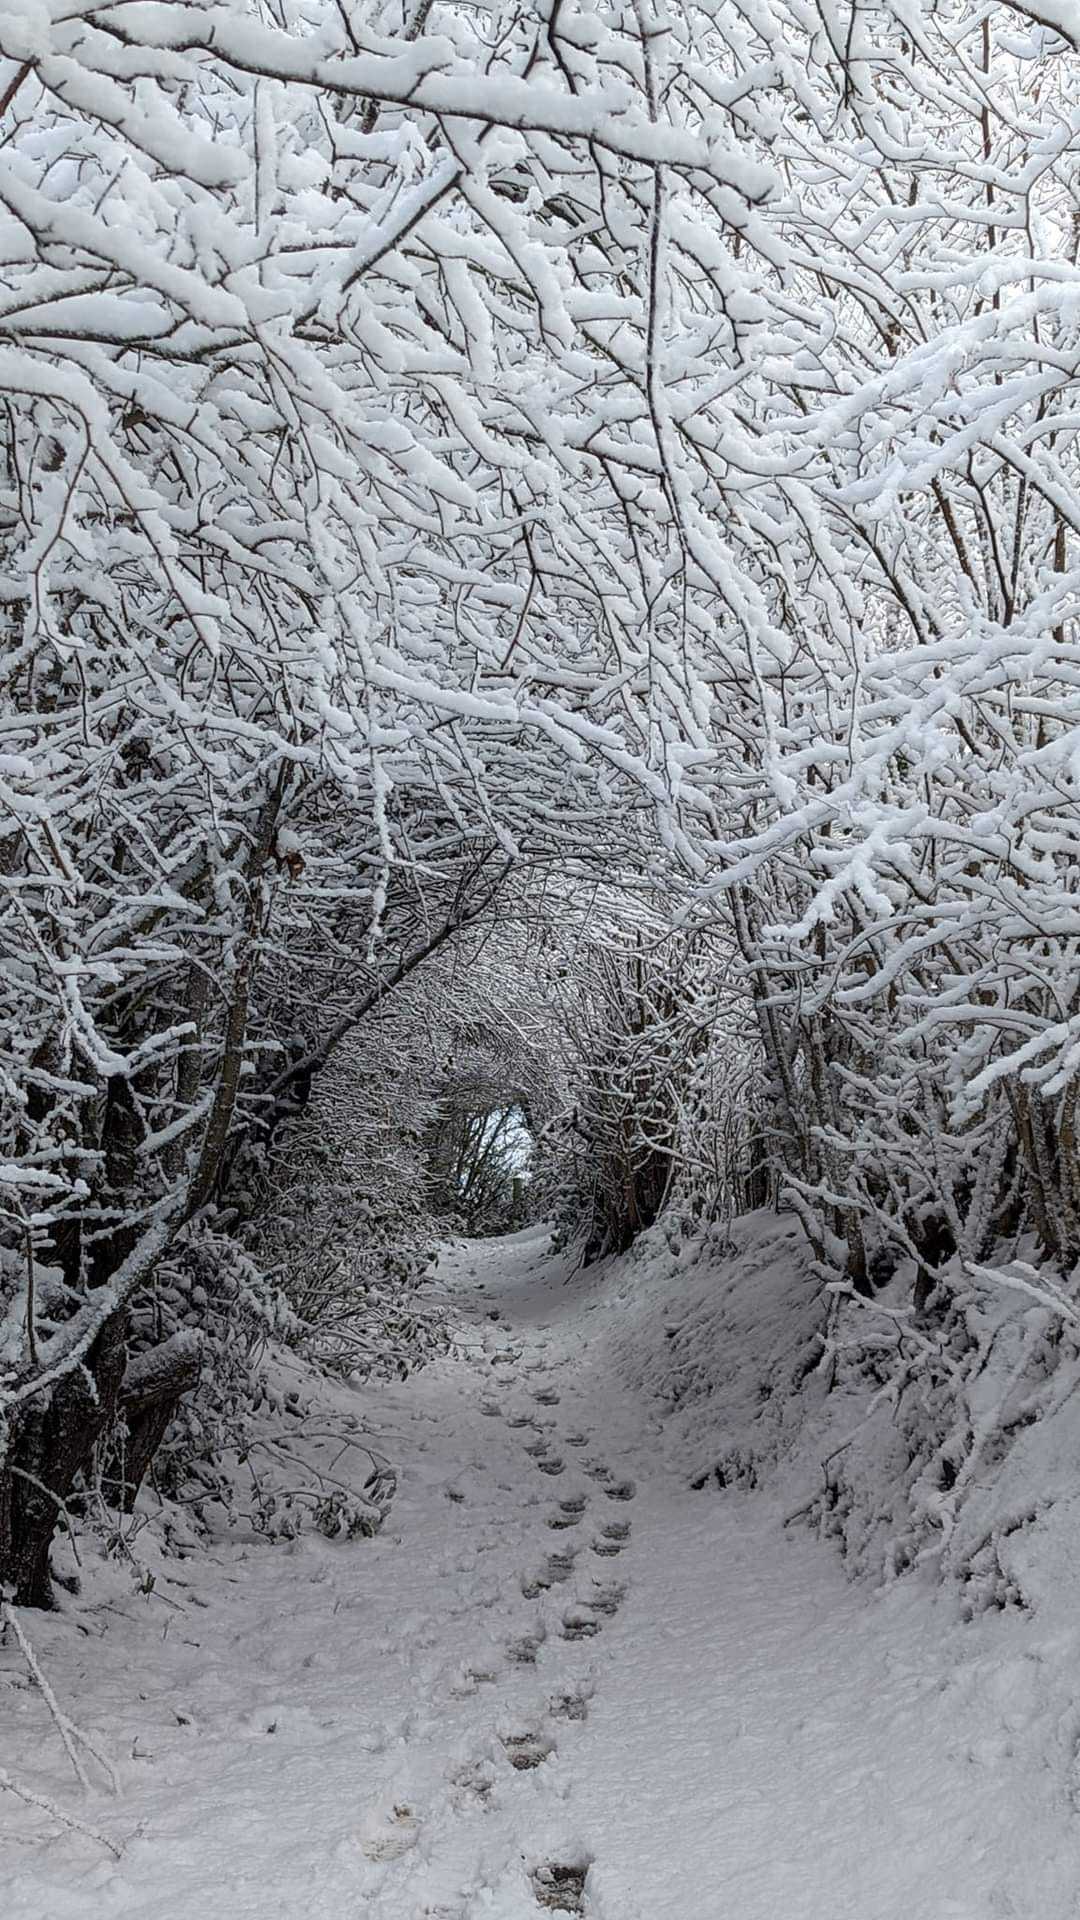 Heswall in the snow by Azalea ORourke